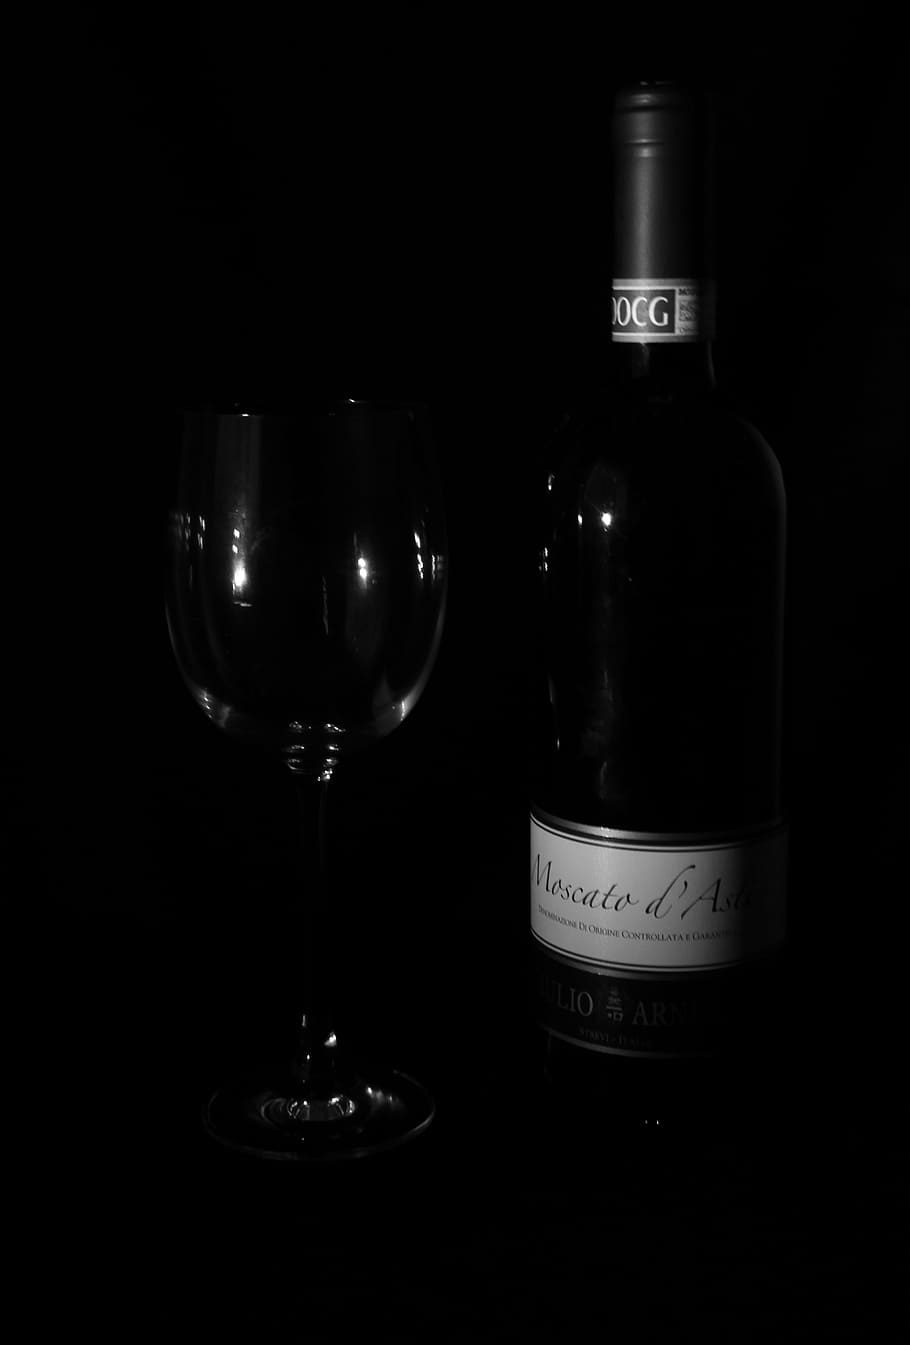 HD wallpaper: wine, glass, black and white, low key, dark, drink